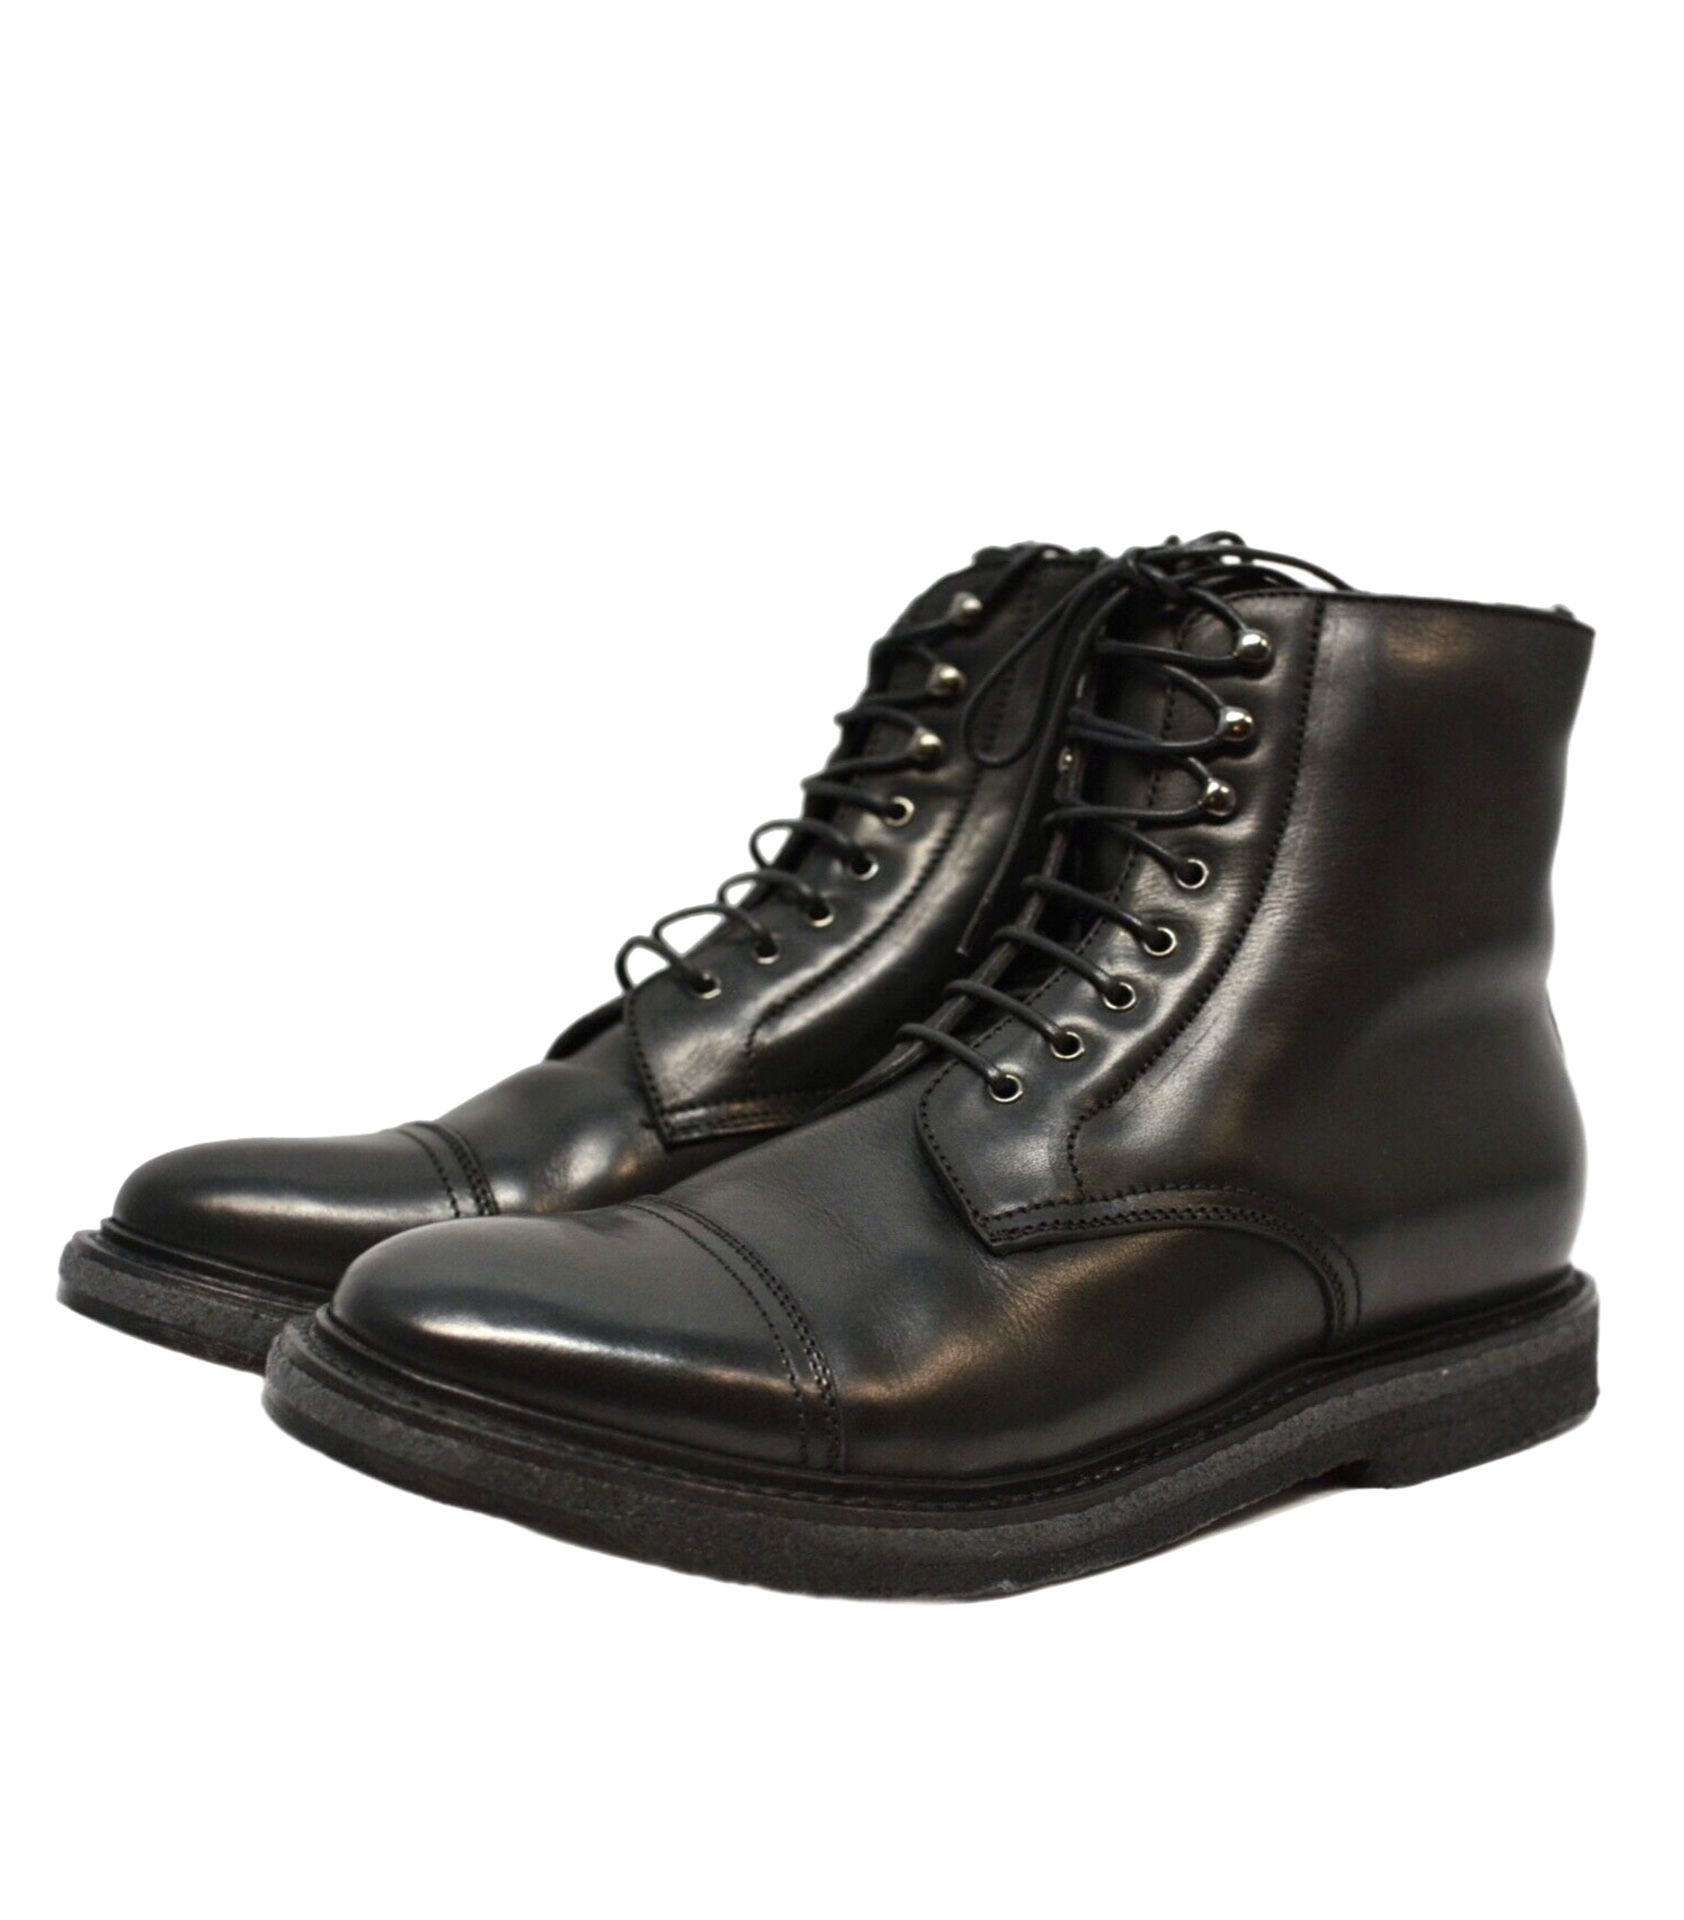 Ralph Lauren Leather Men's Boots Trystan Black Vachetta Shearling lamb Lined 10D